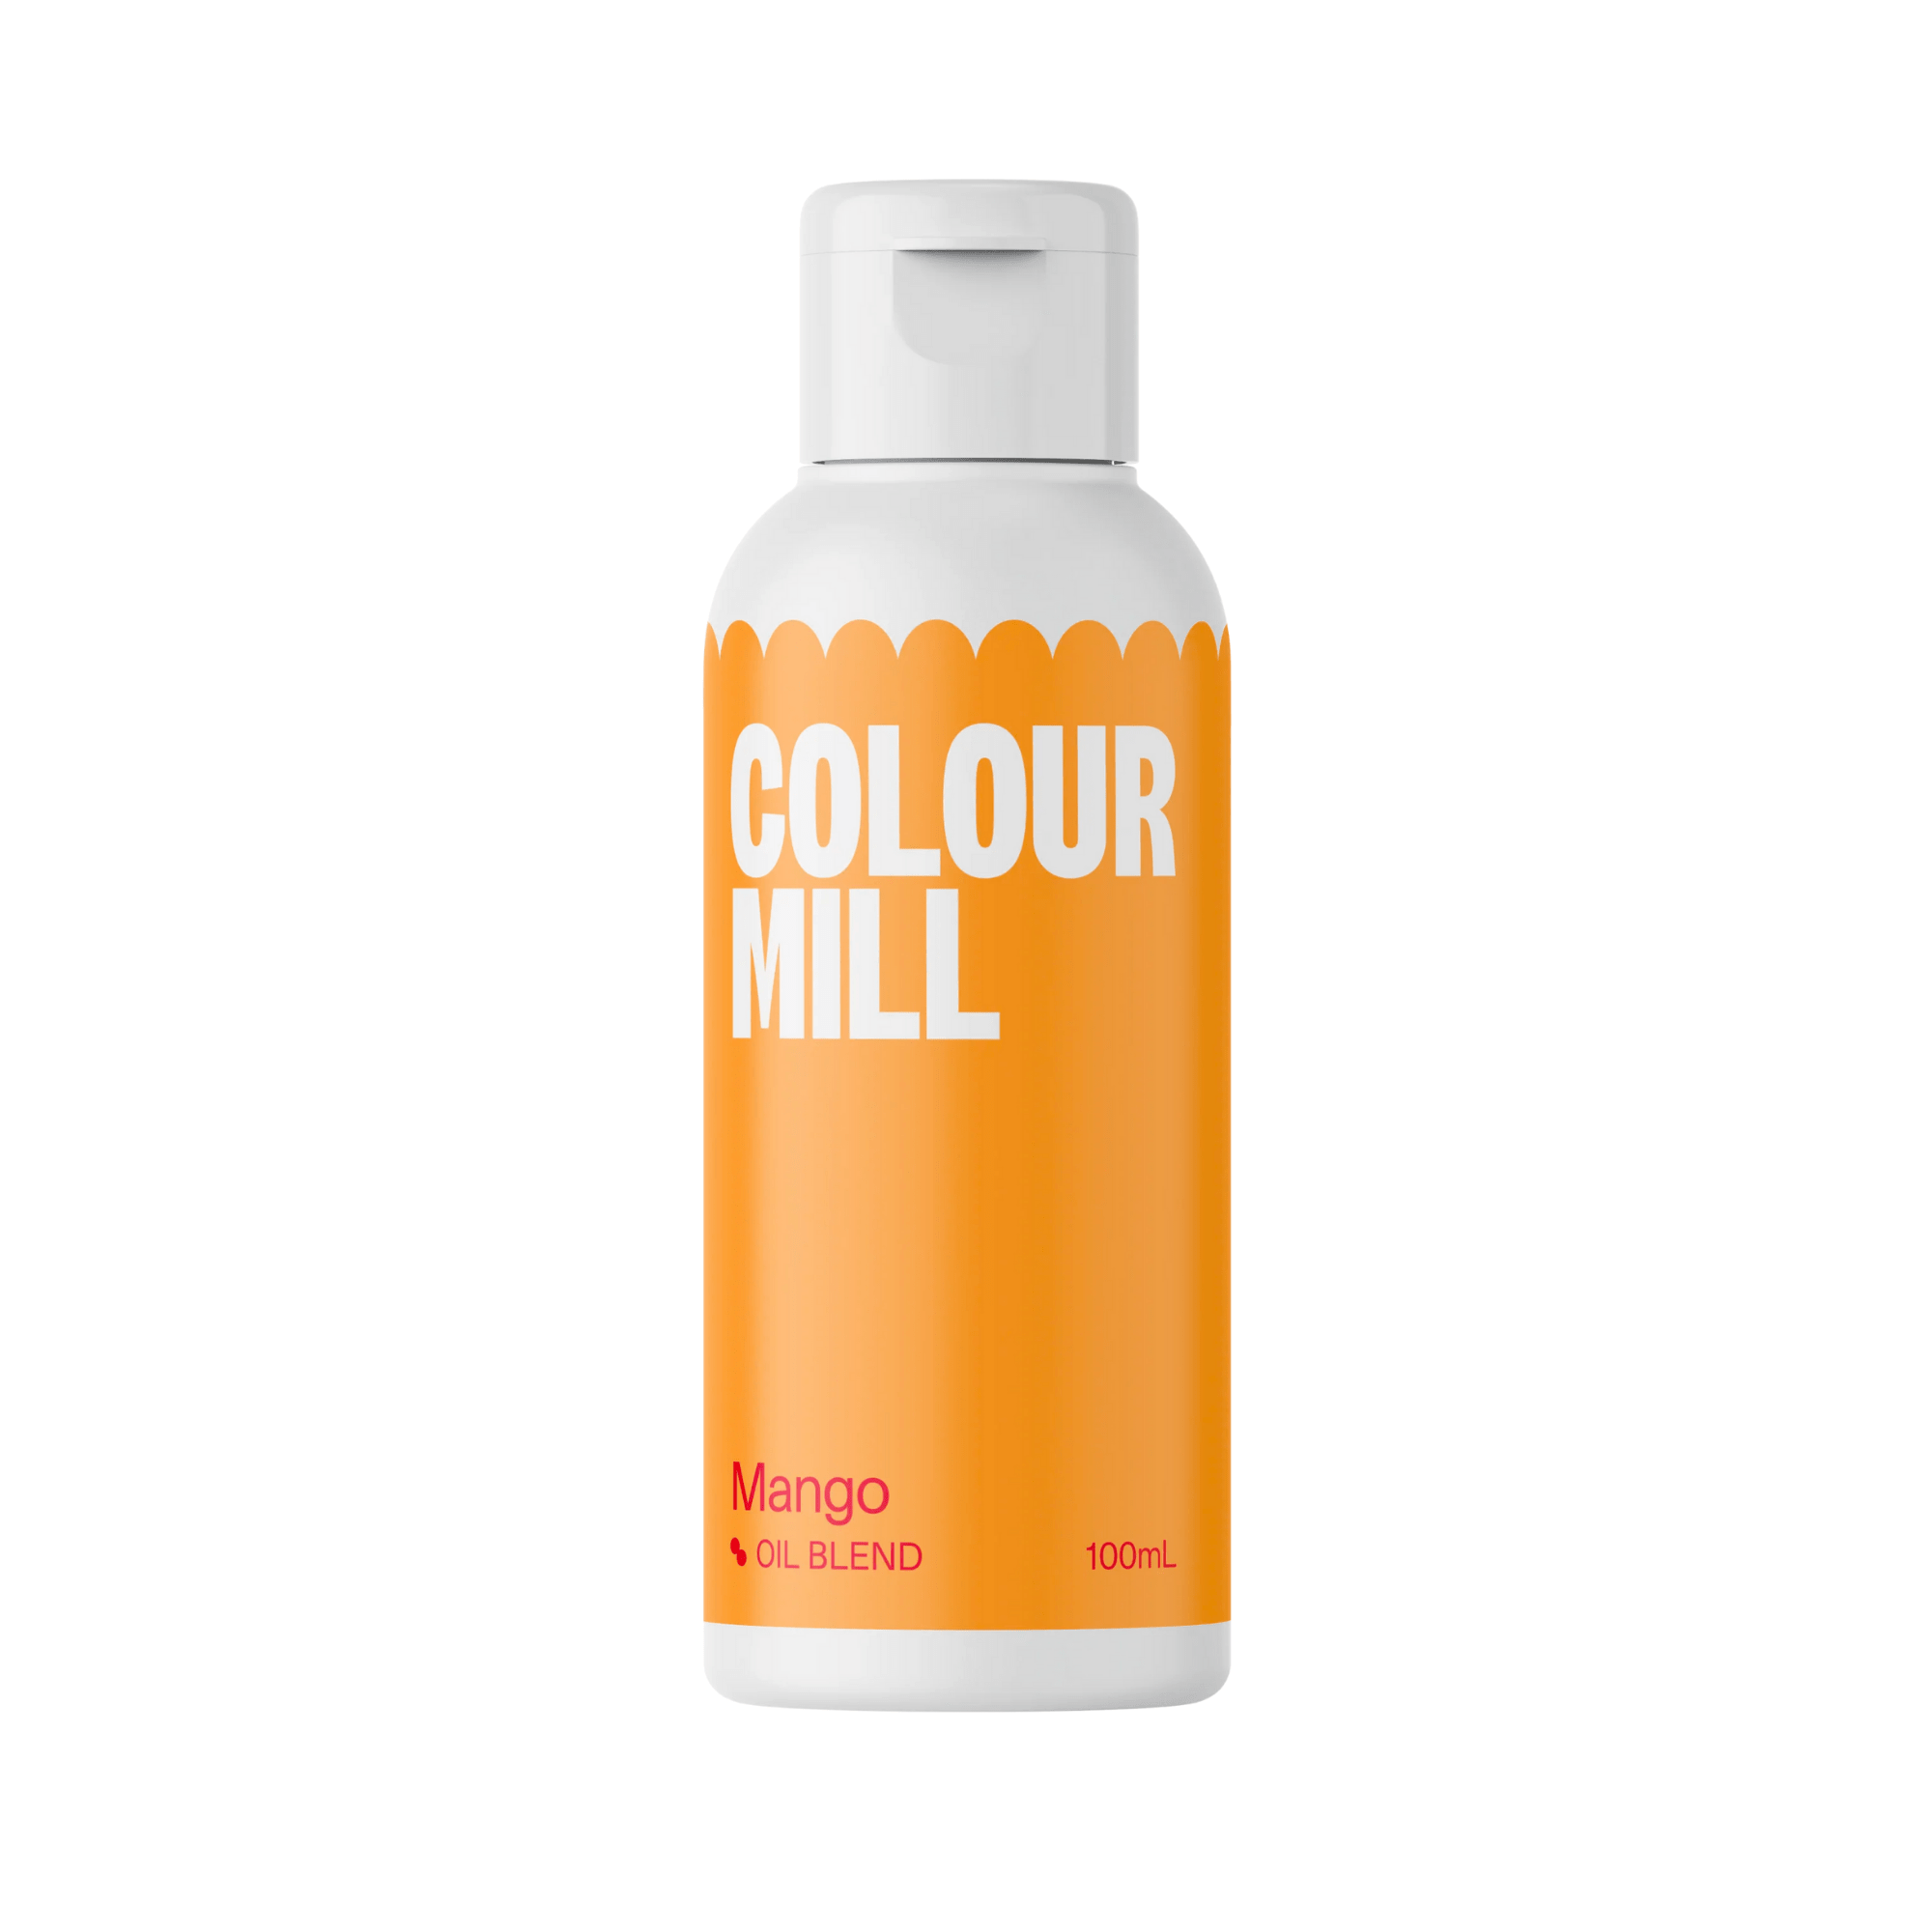 Happy Sprinkles Streusel 100ml Colour Mill Mango - Oil Blend